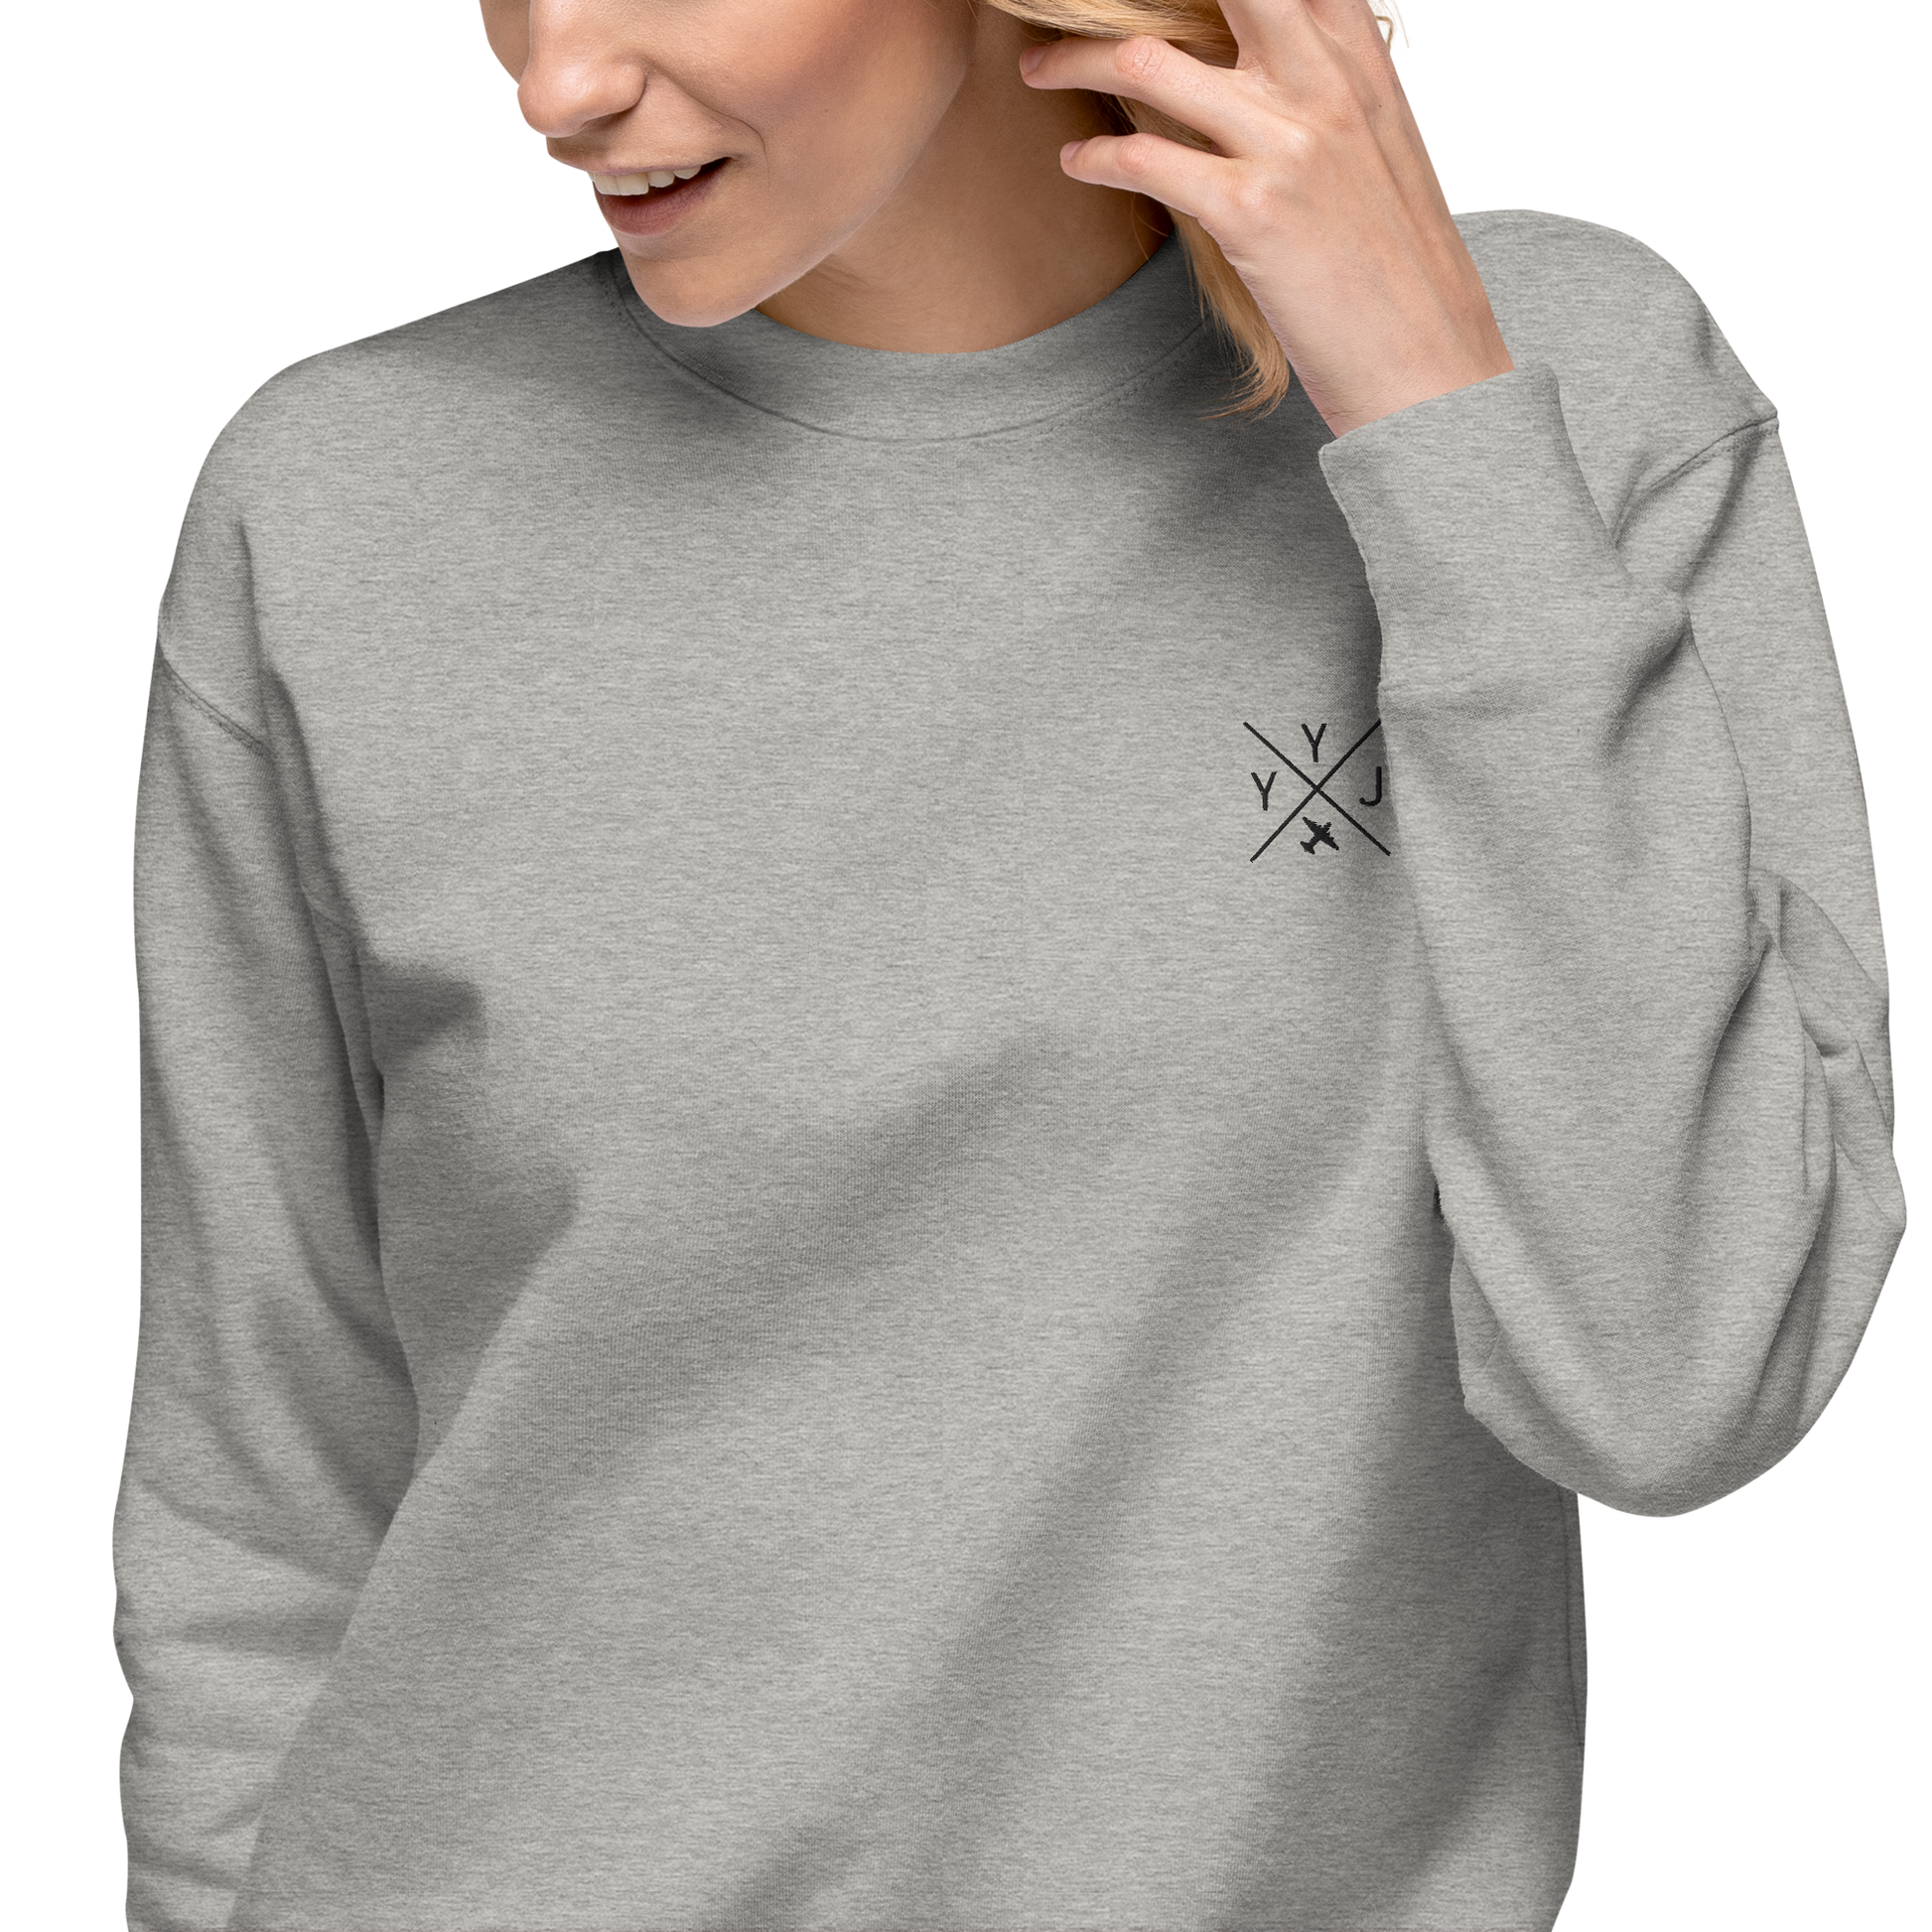 YHM Designs - YYJ Victoria Premium Sweatshirt - Crossed-X Design with Airport Code and Vintage Propliner - Black Embroidery - Image 03